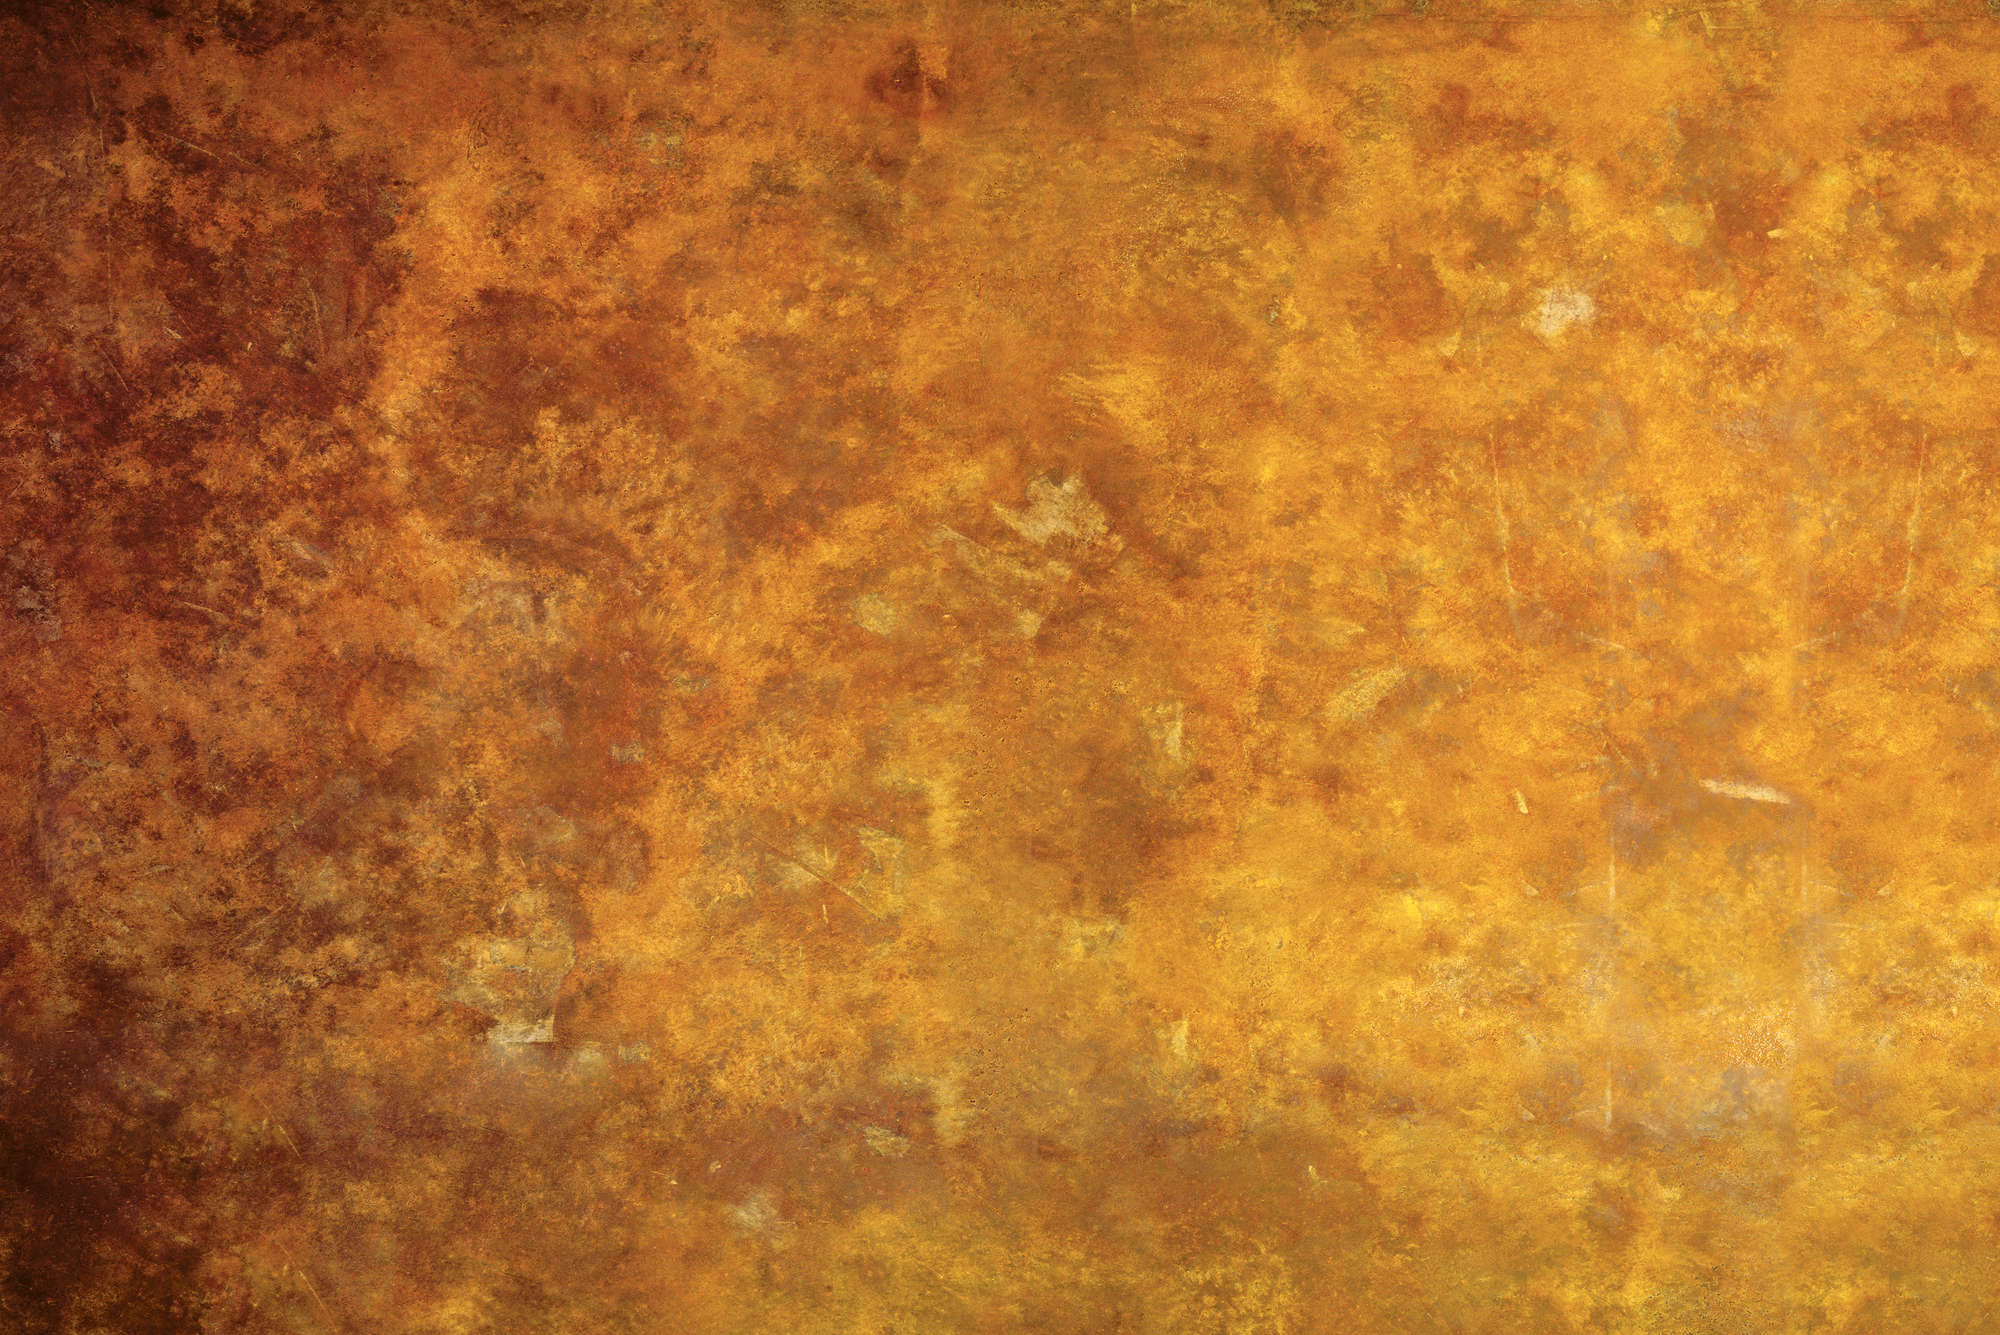             Fototapete Wand mit Rost in Hellbraun-Orange – Mattes Glattvlies
        